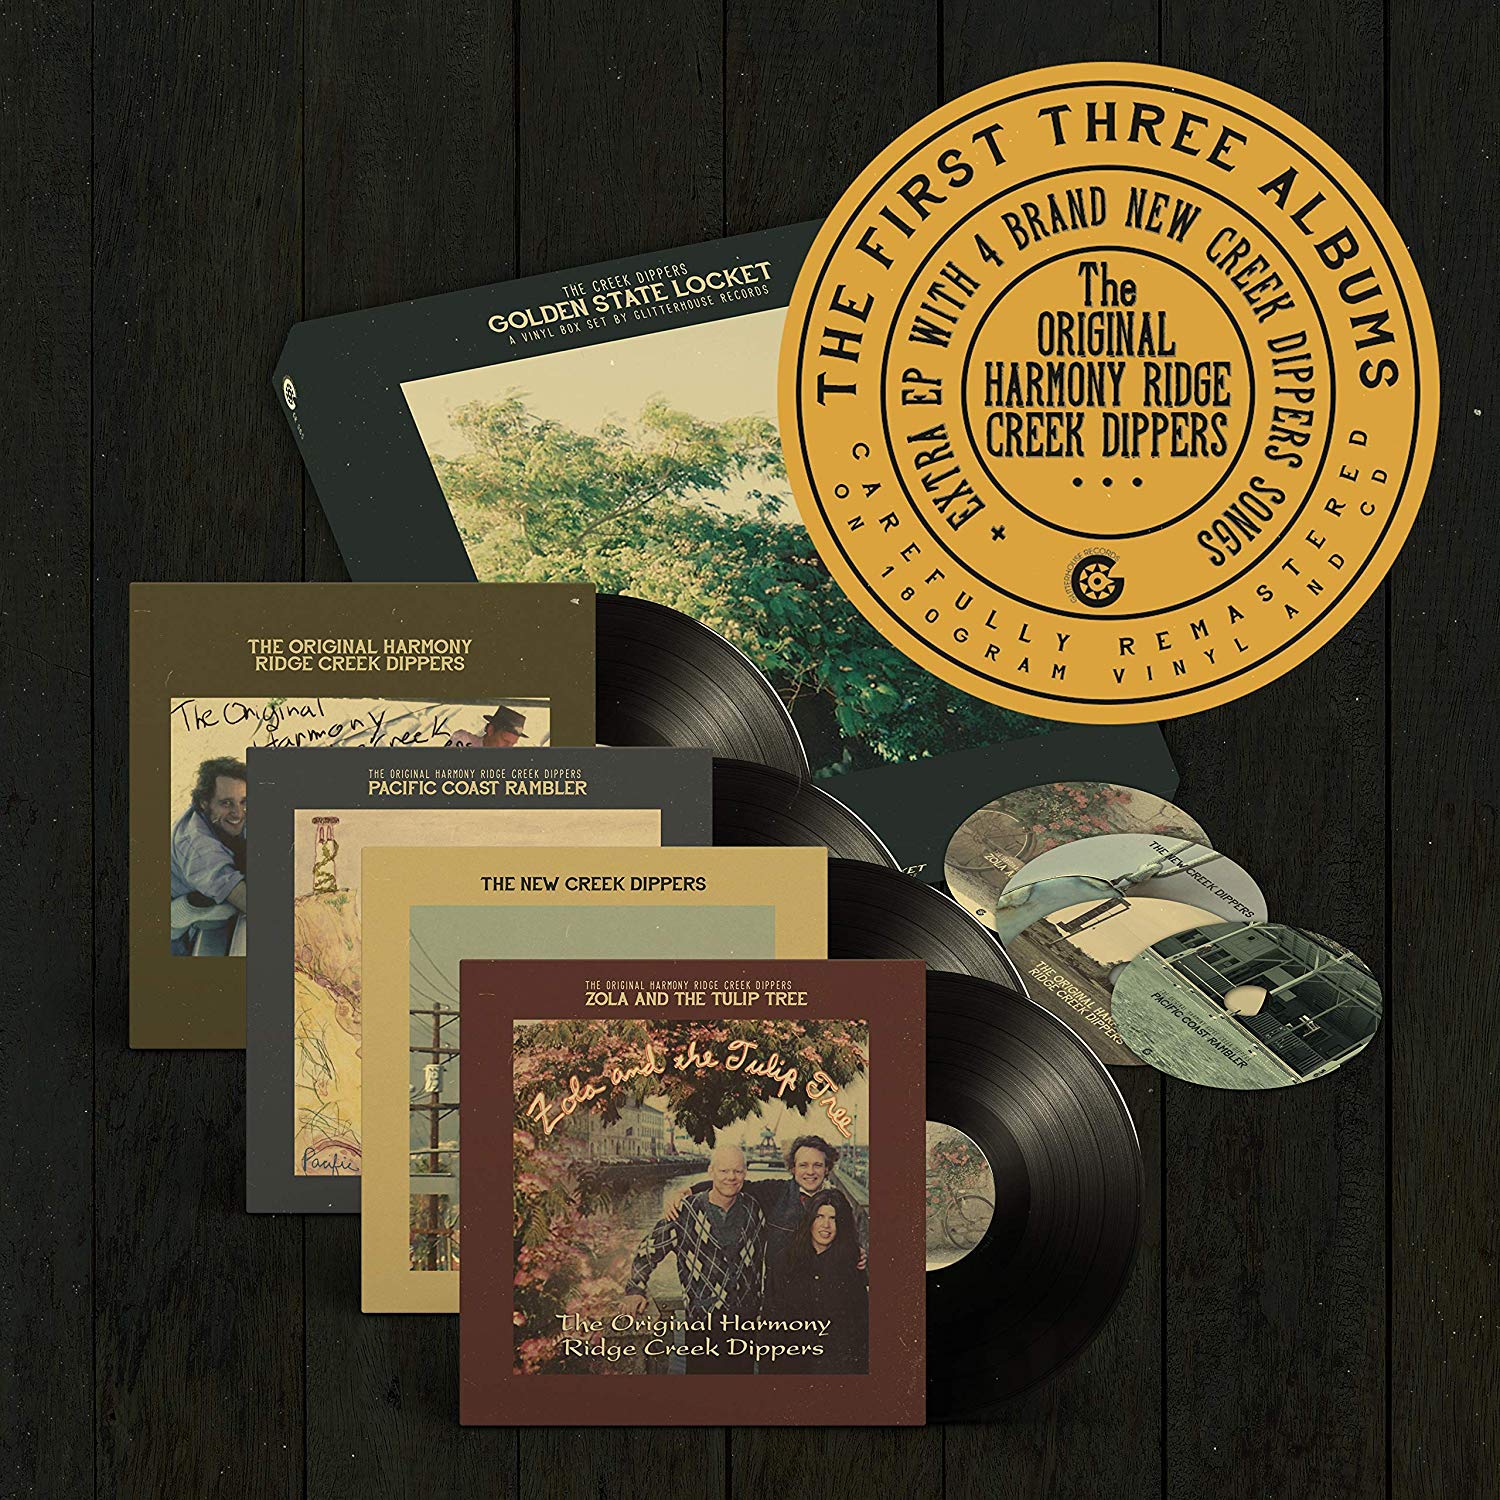 Original Harmony Ridge Creek Dippers - Golden State Locket vinyl cover